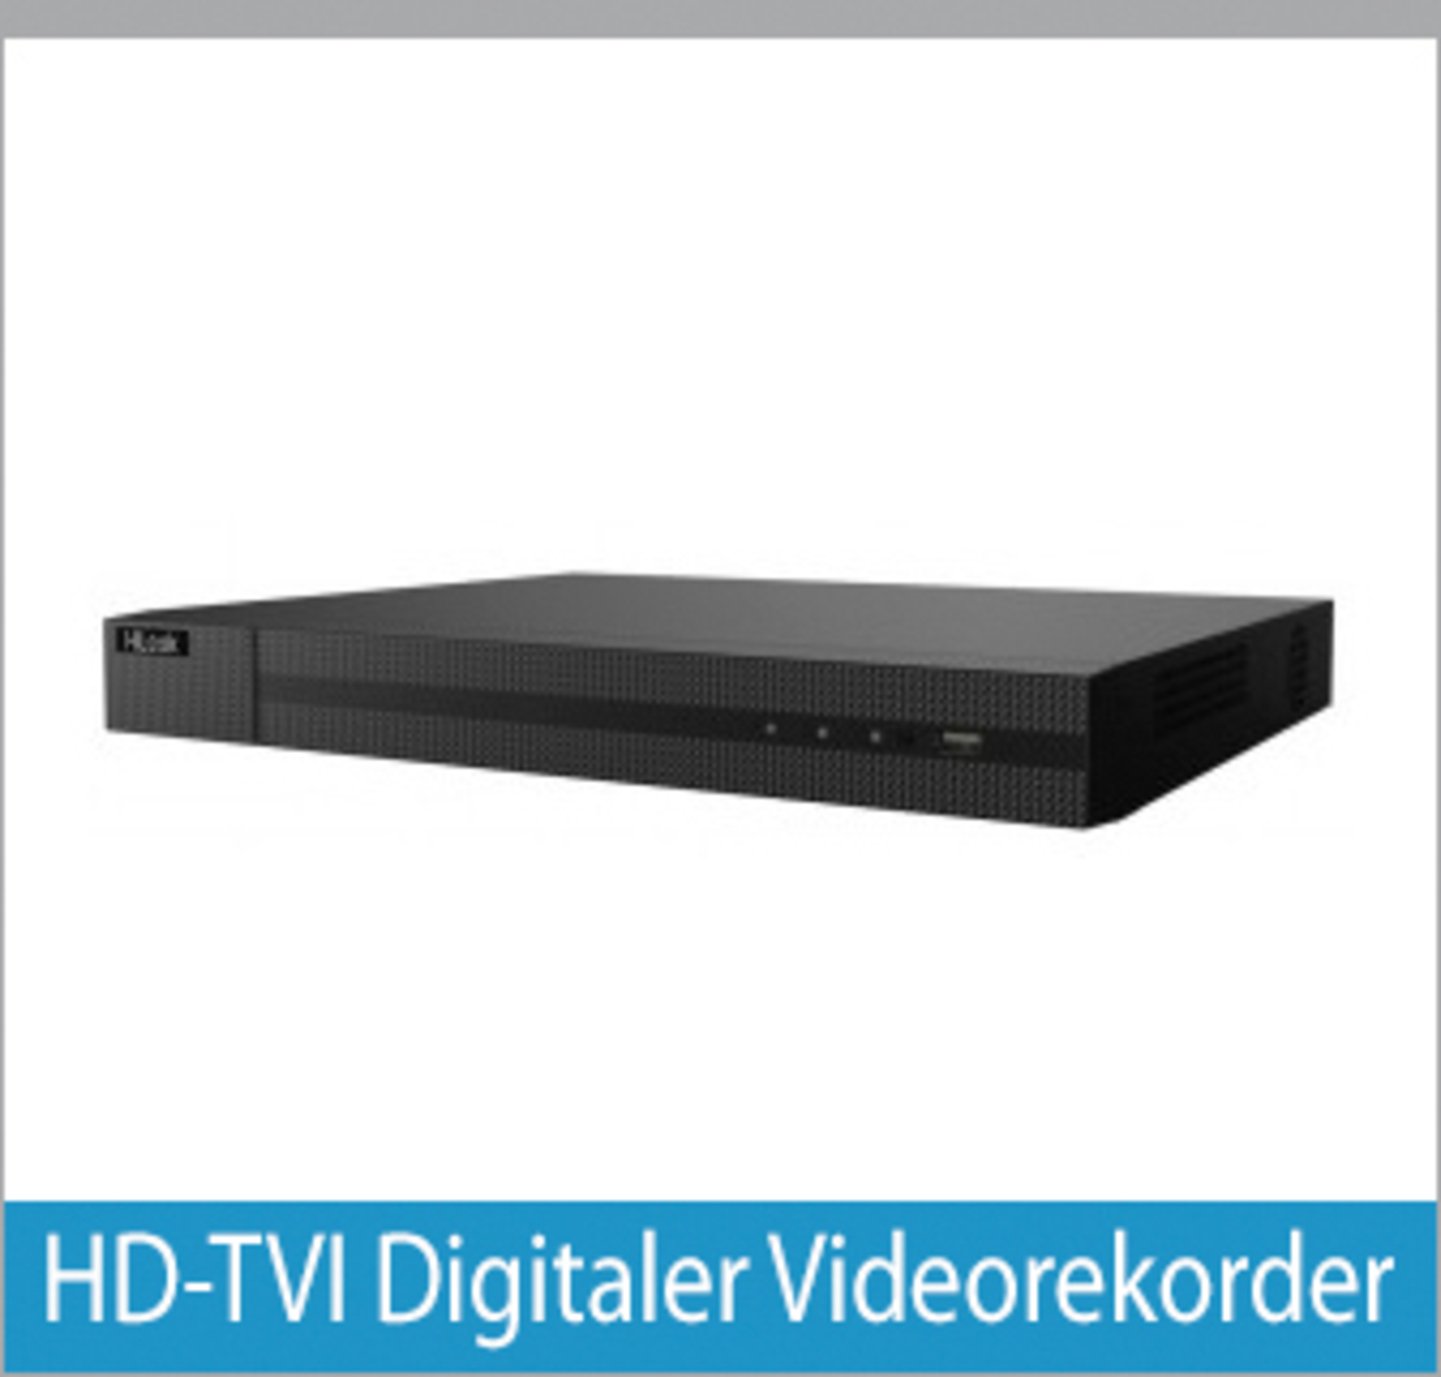 HD-TVI Digitaler Videorekorder